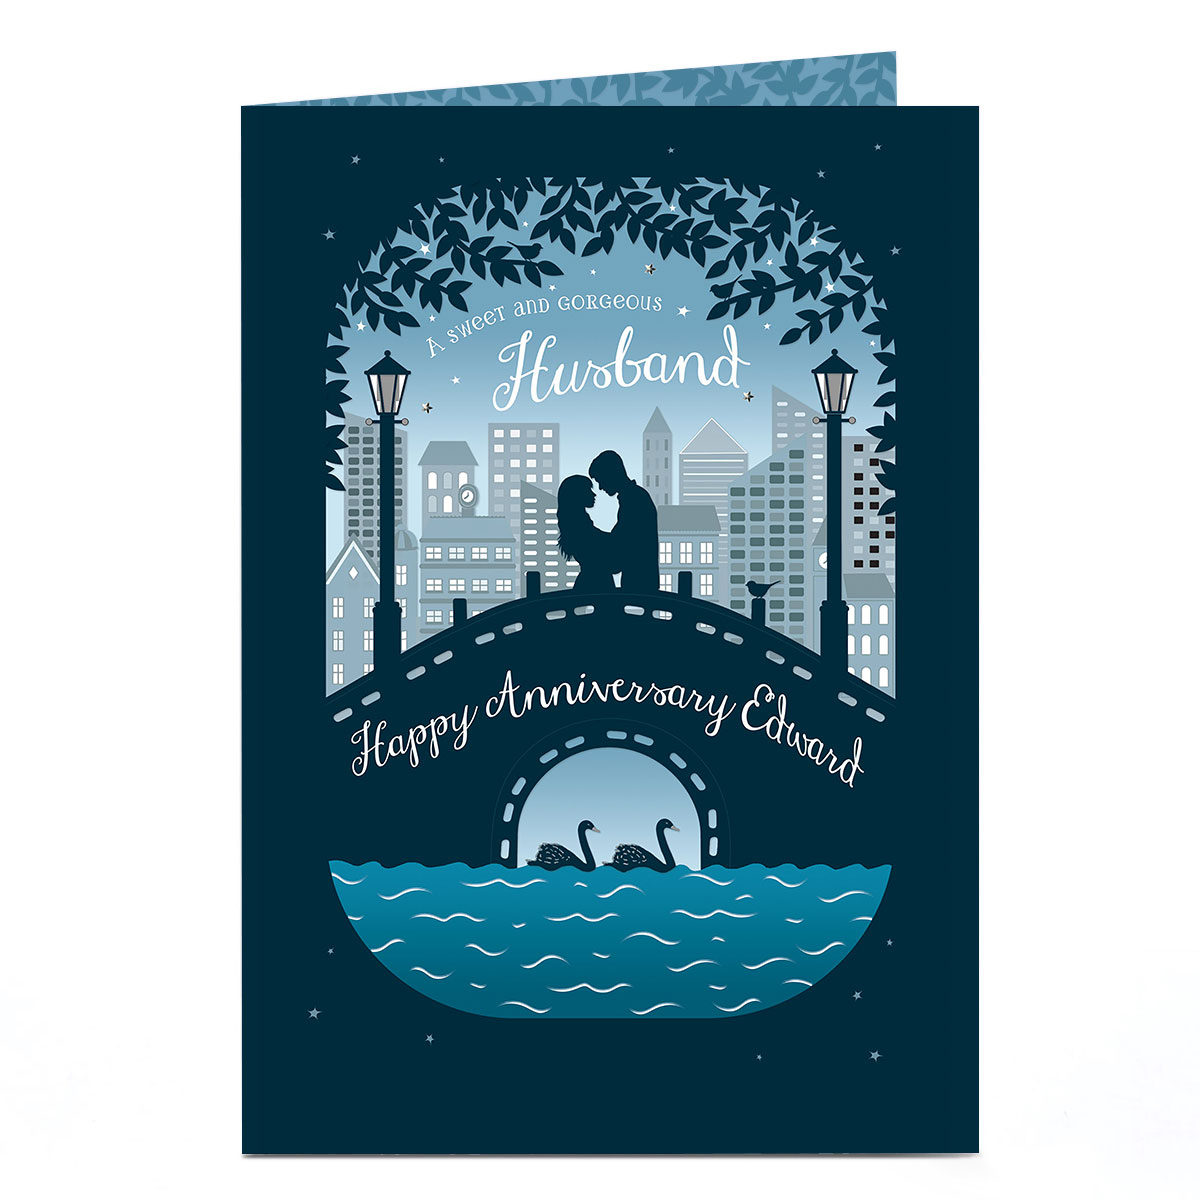 Personalised Anniversary Card - Bridge Silhouette